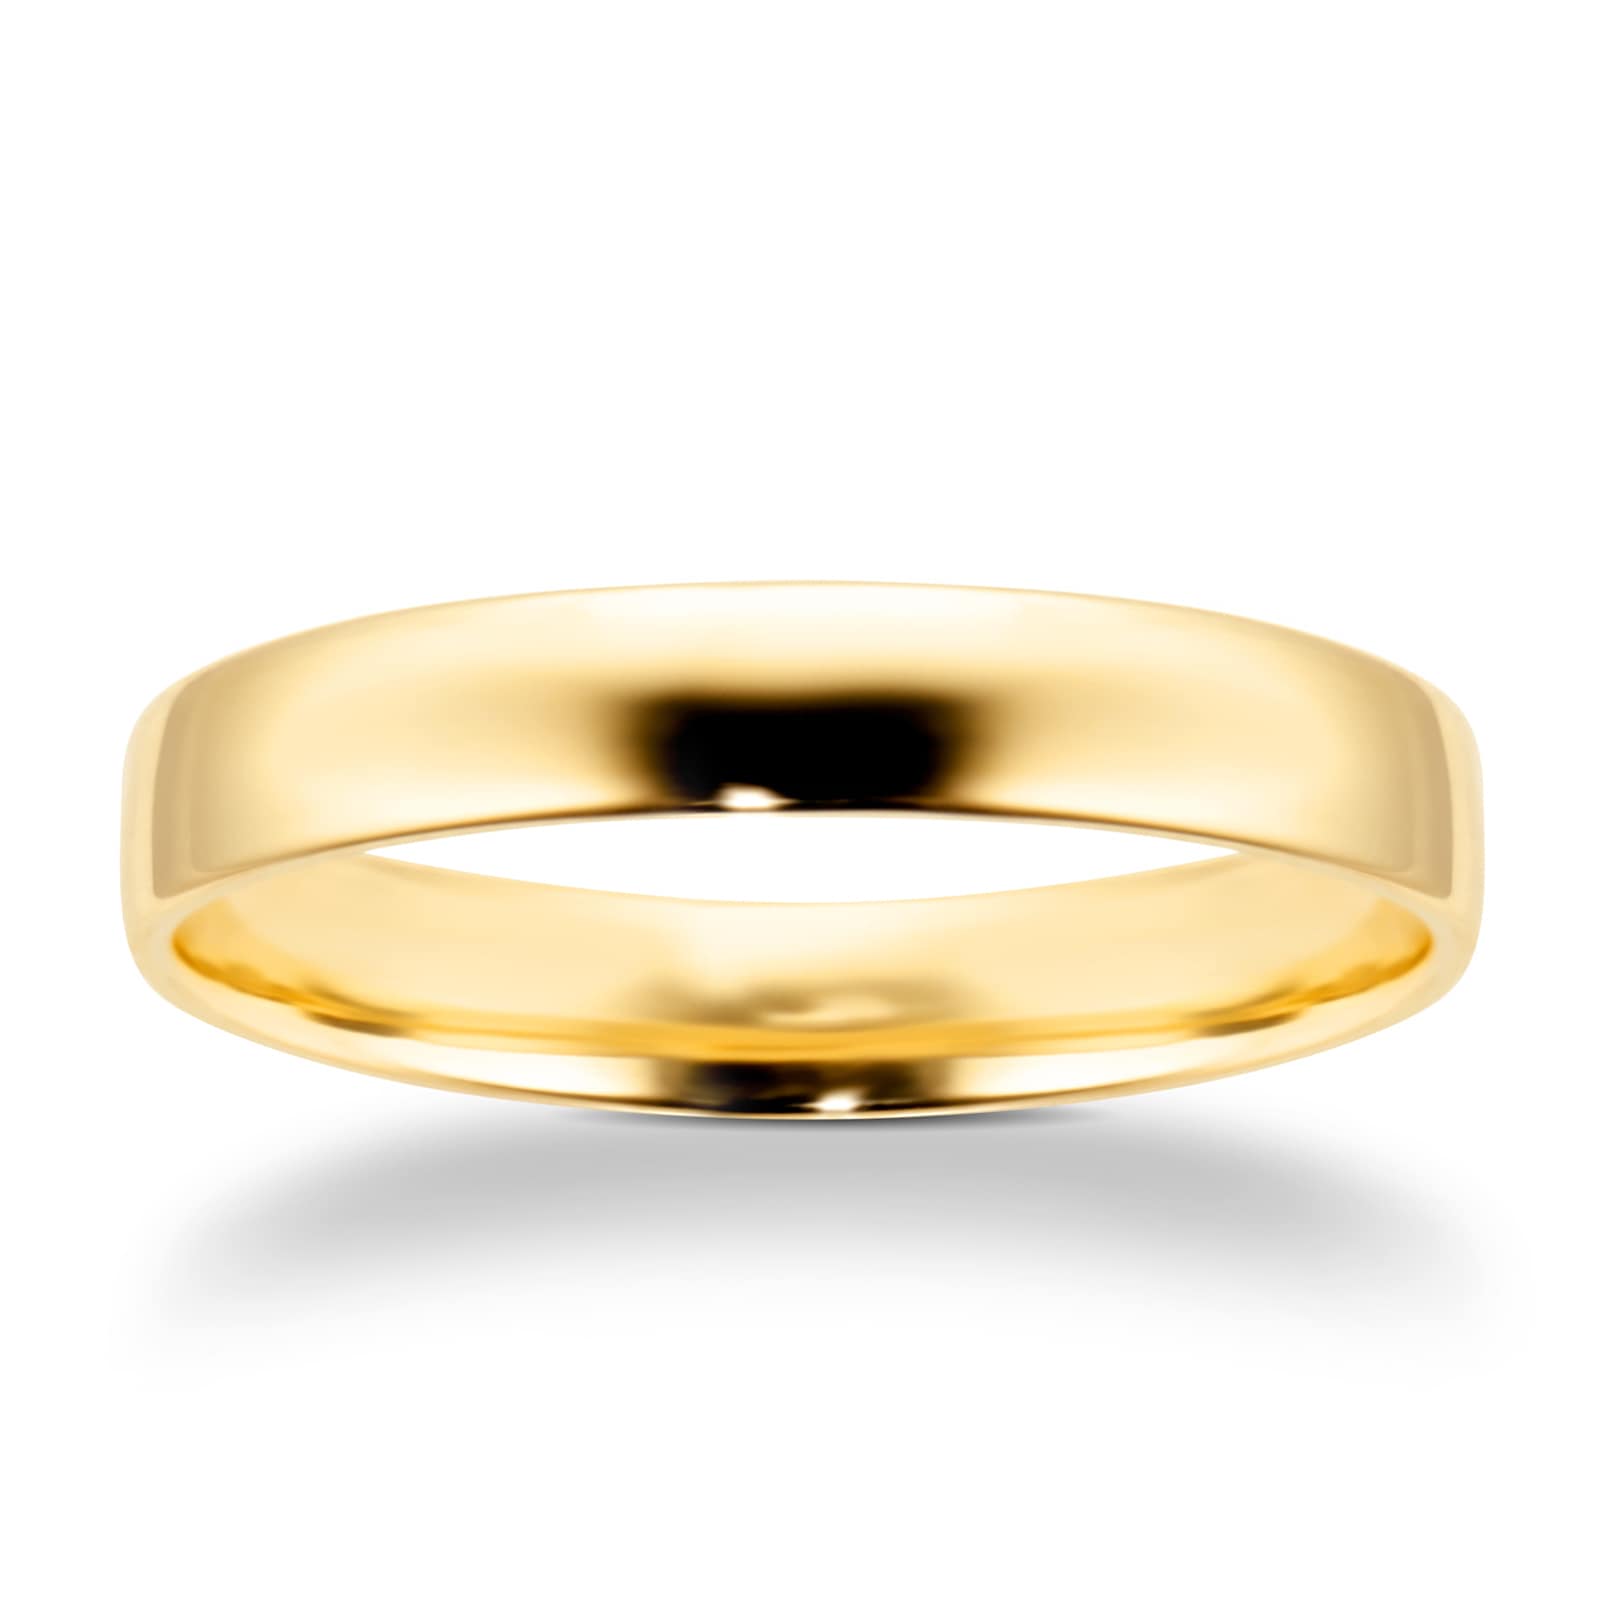 4mm Slight Court Standard Wedding Ring In 18 Carat Yellow Gold - Ring Size N